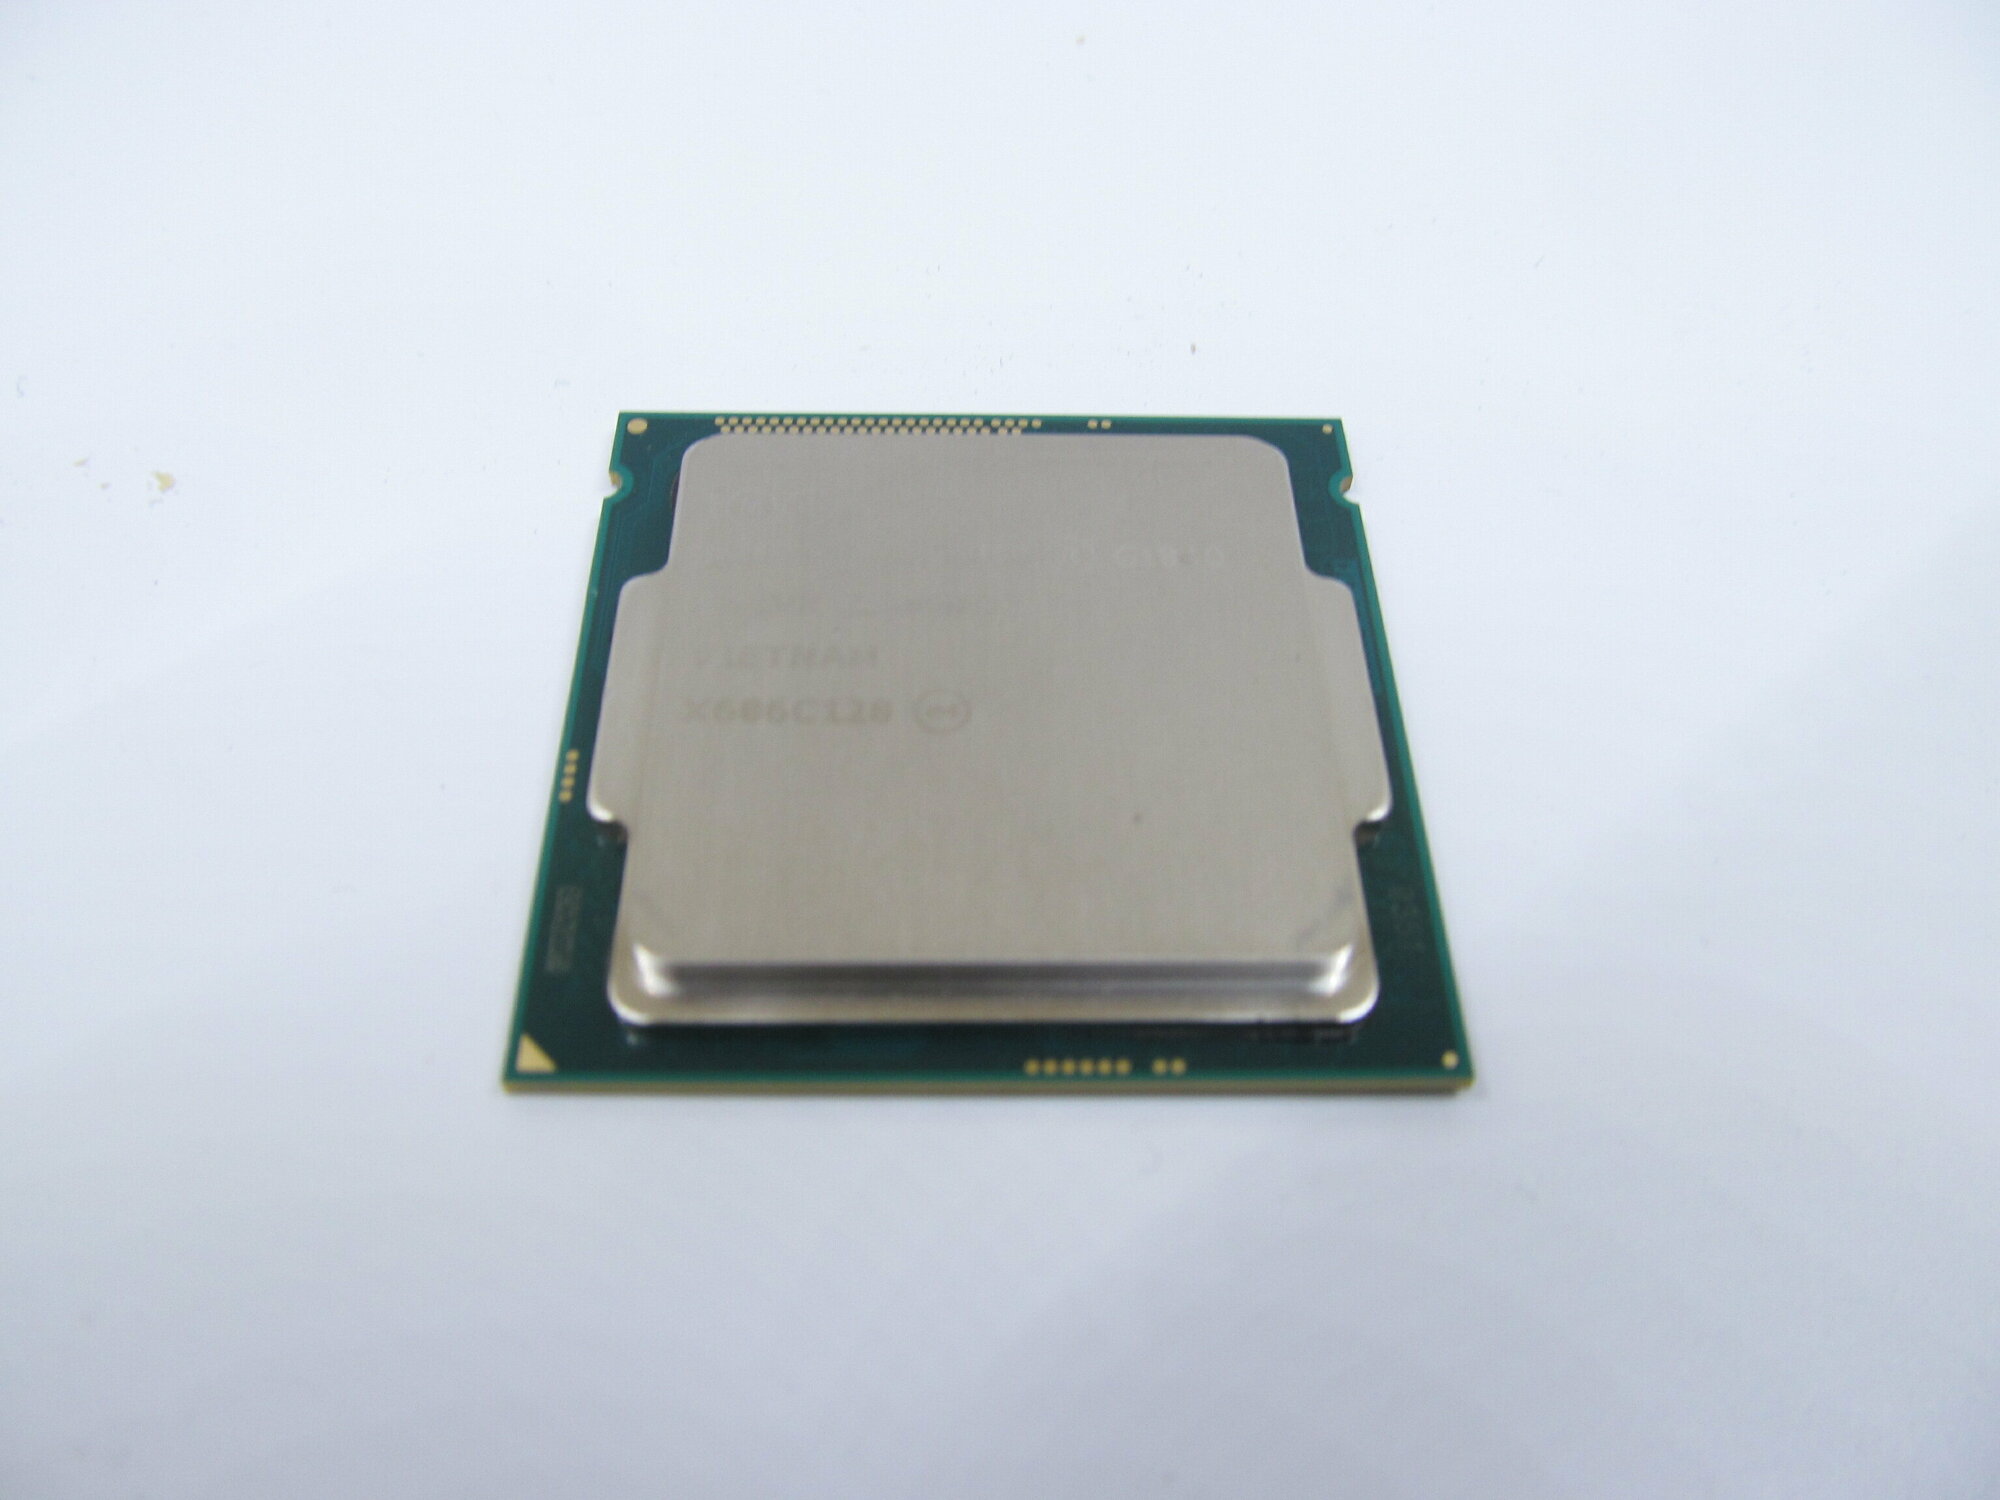 Процессор Intel Celeron G1840 LGA1150 2 x 2800 МГц